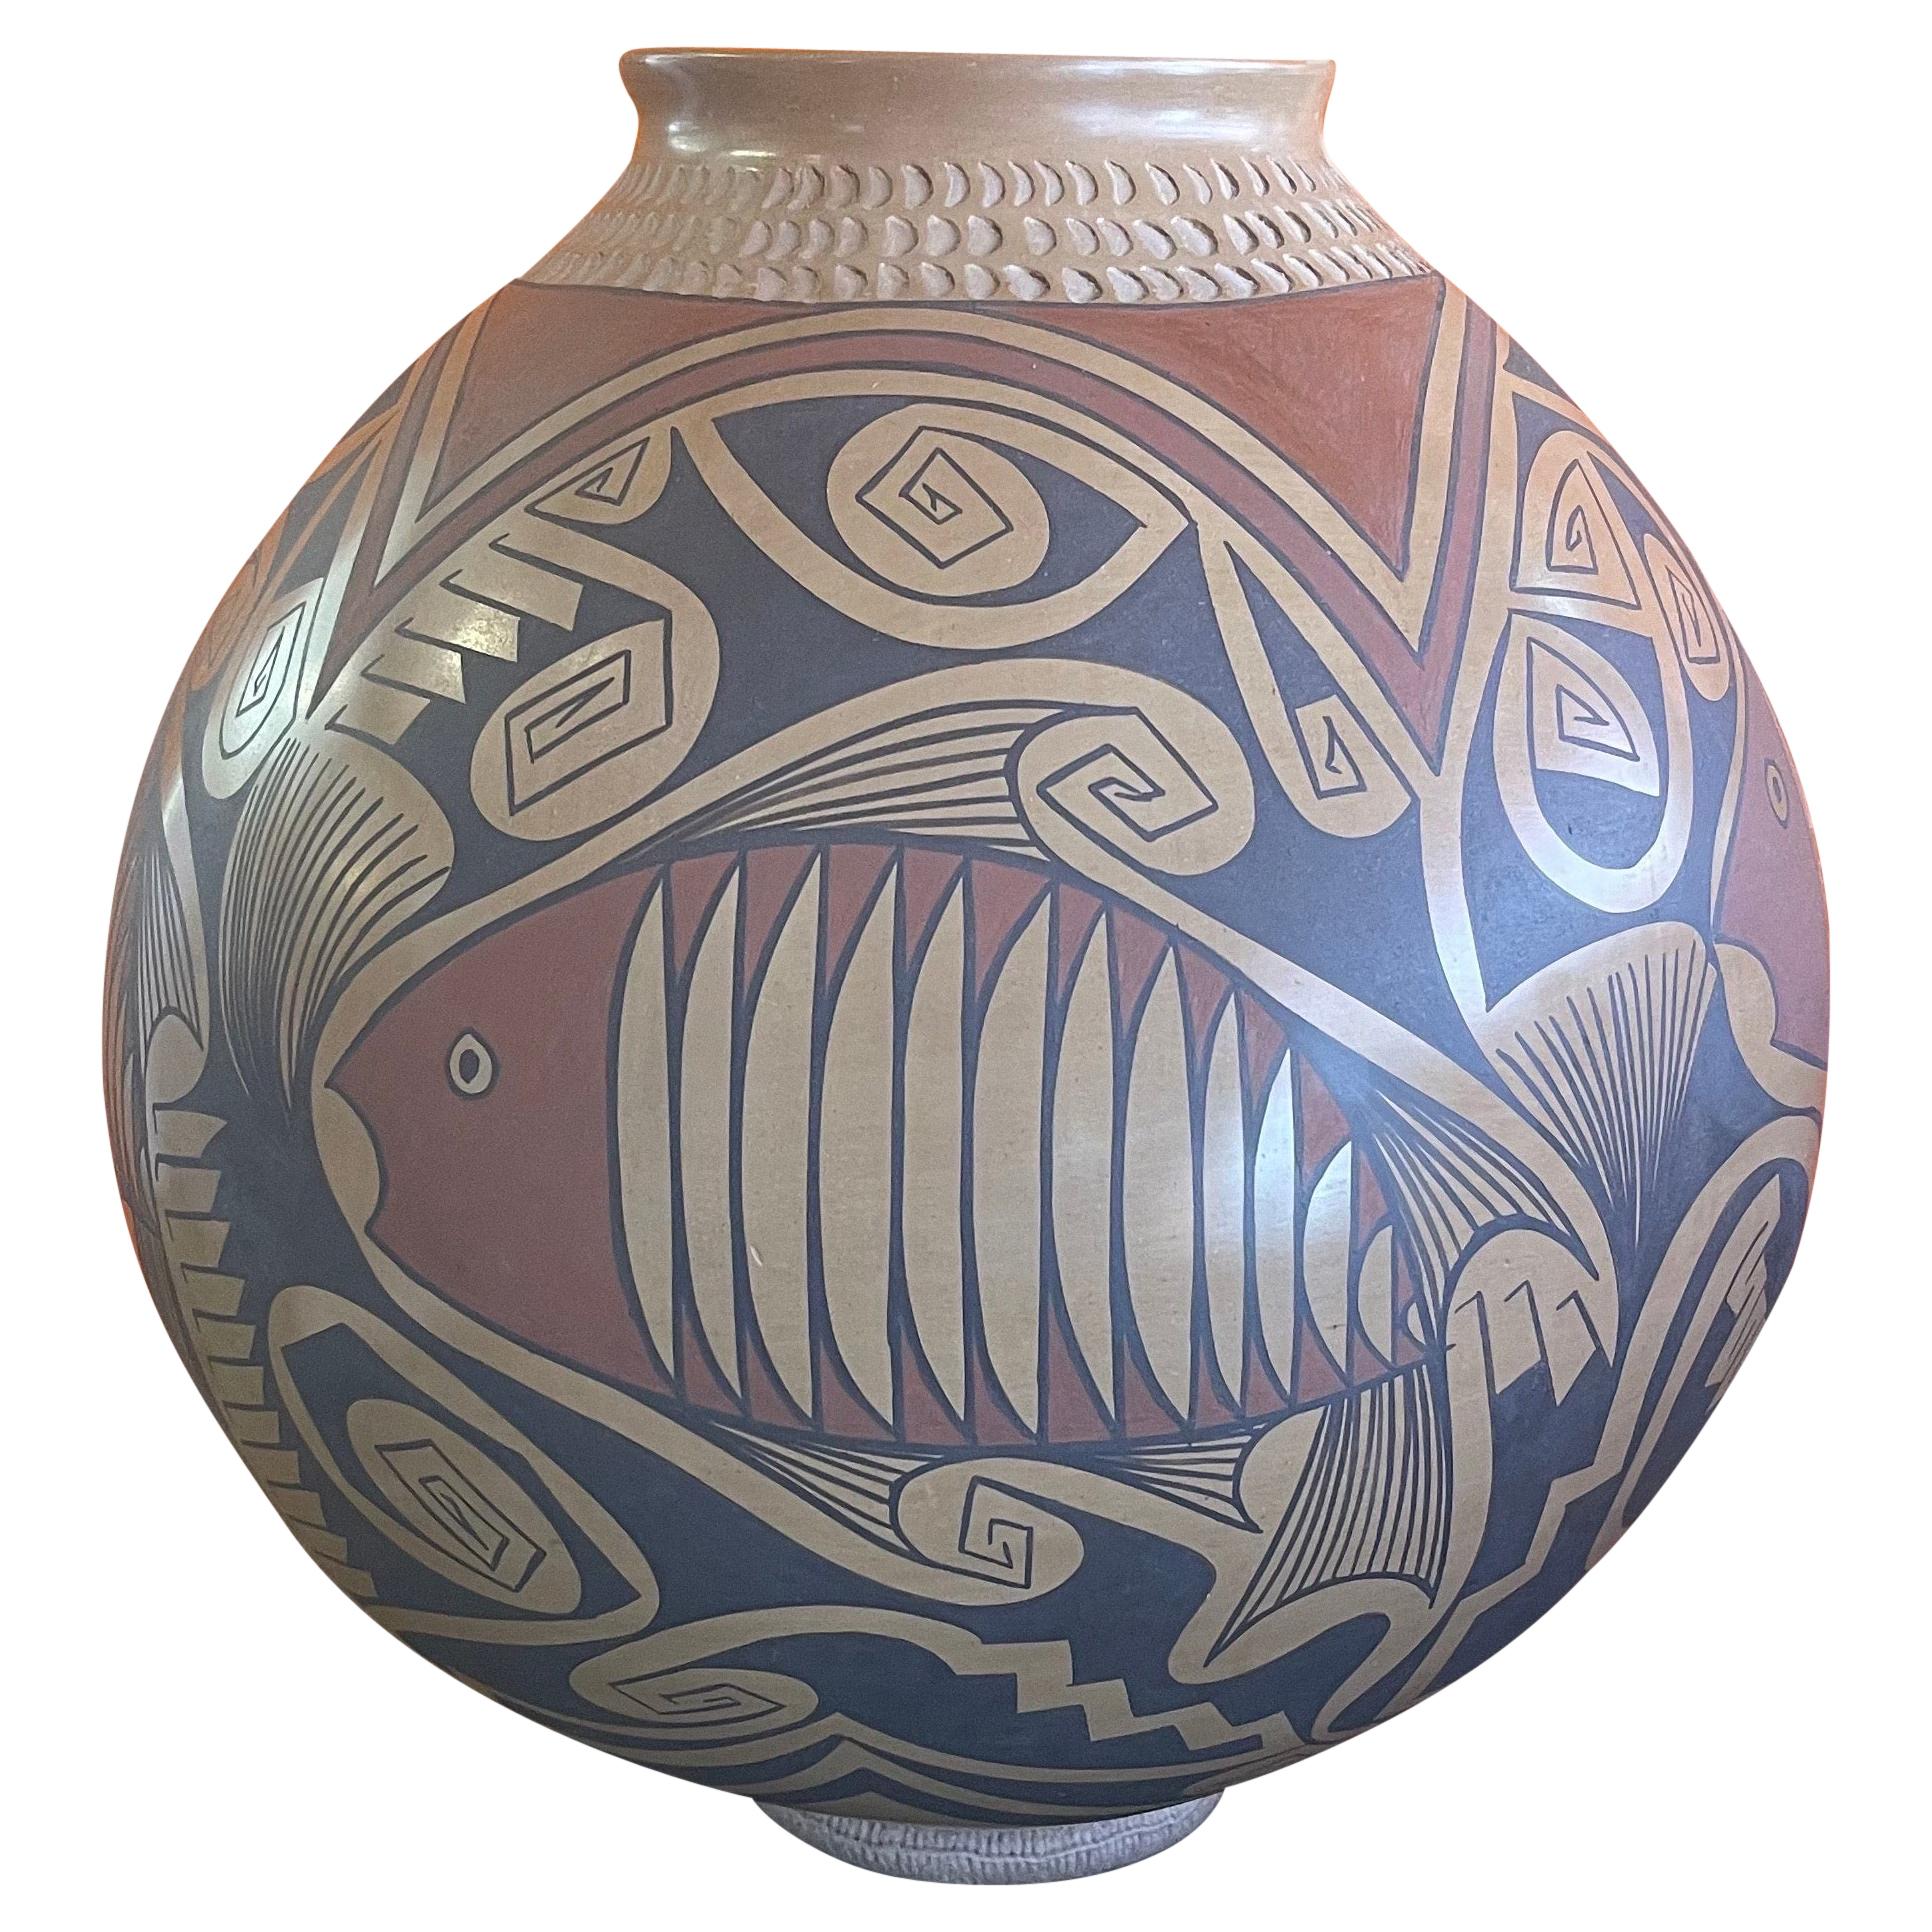 Massives polychromes Mata-Ortiz-Keramikgefäß von Gloria Hernandez